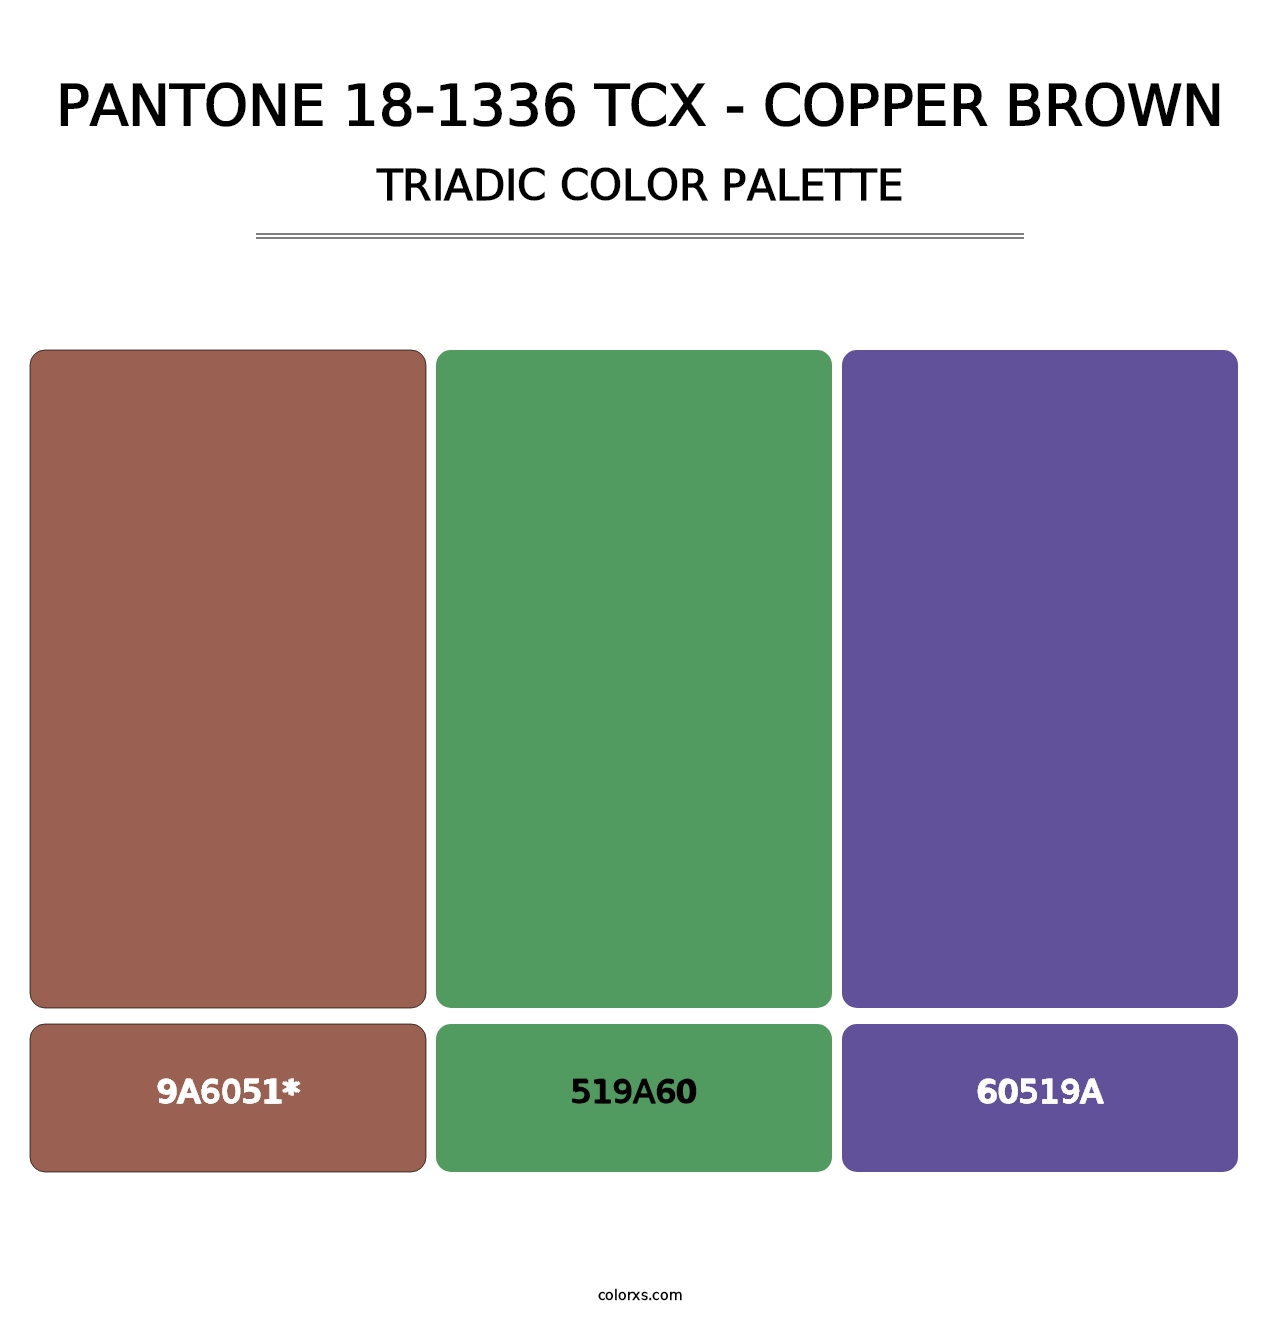 PANTONE 18-1336 TCX - Copper Brown - Triadic Color Palette